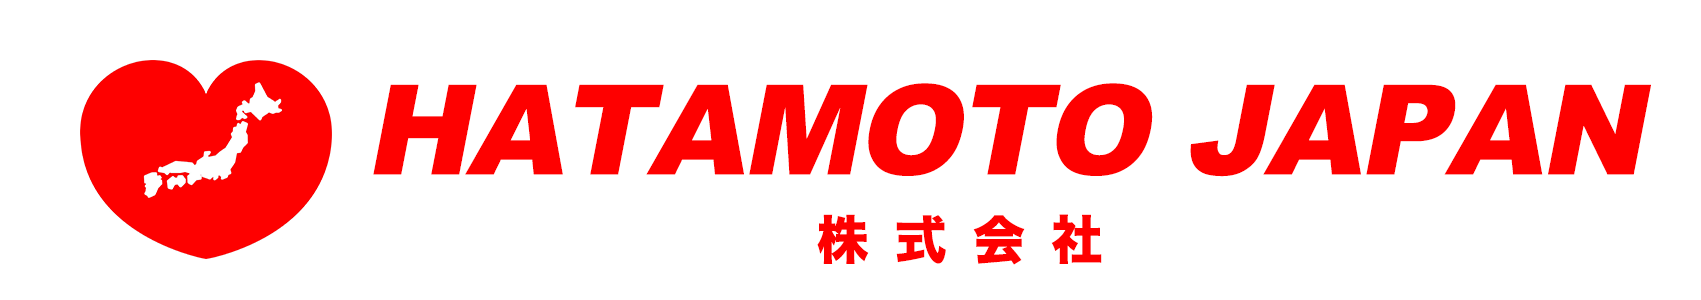 HATAMOTO JAPAN 株式会社